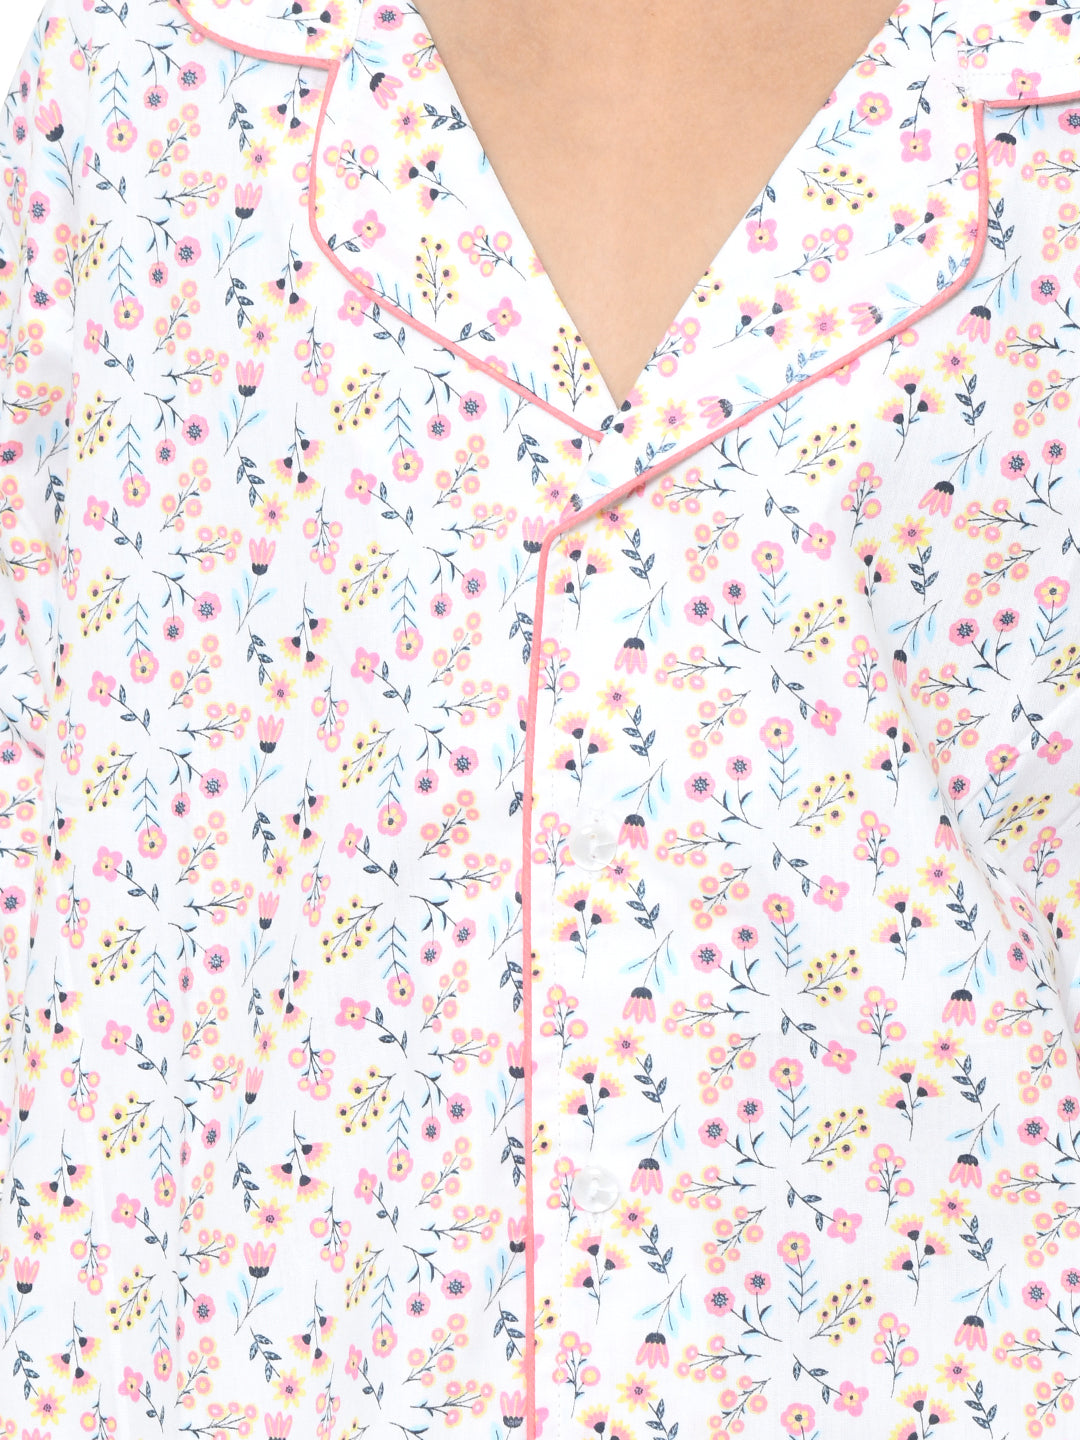 Floral Printed Cotton Girls Nightwear